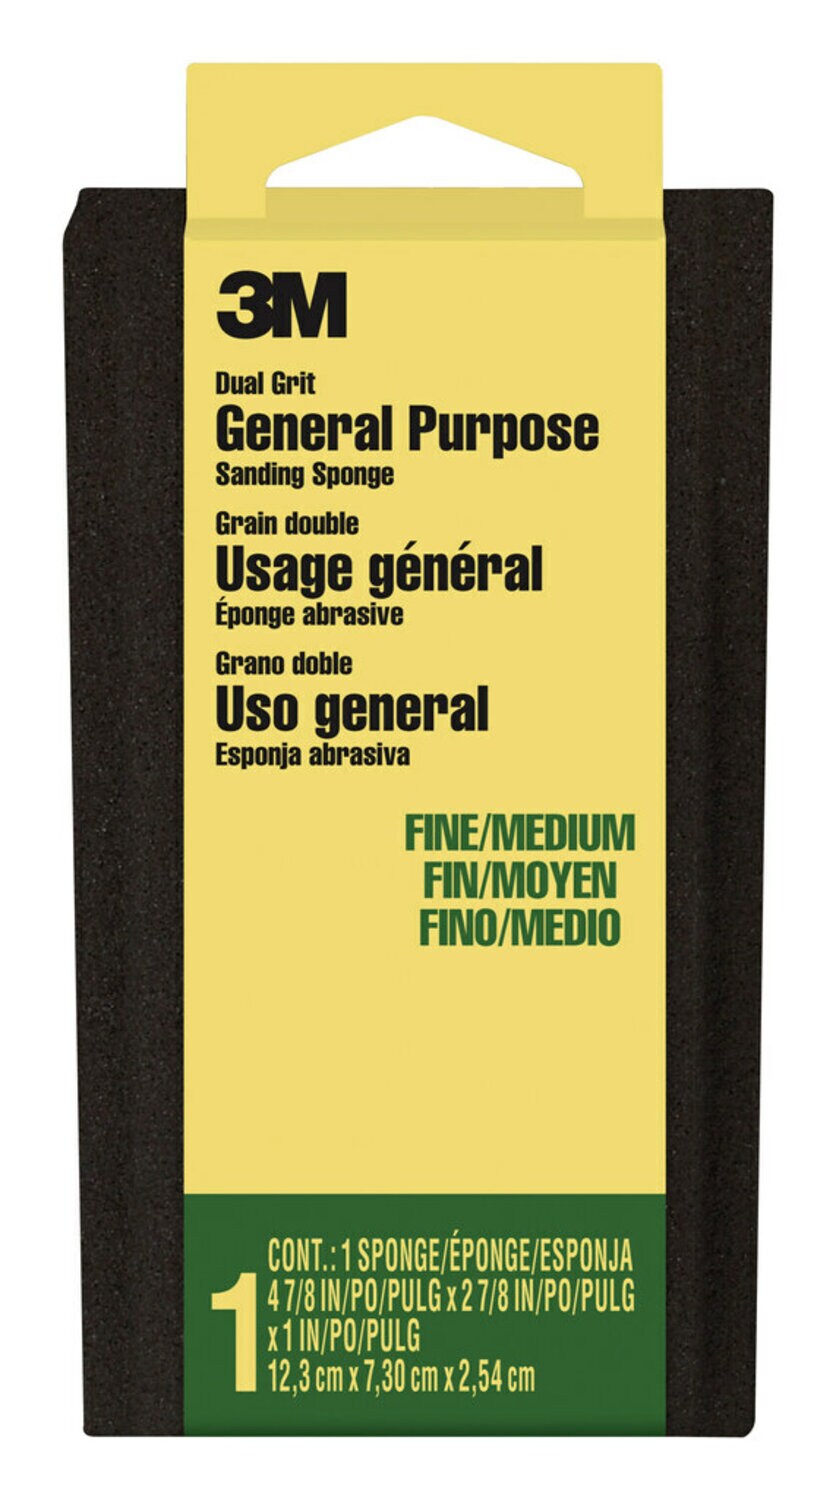 7100113705 - 3M General Purpose Sanding Sponge DSFM-F-ESF-10, 2 7/8 in x 4 7/8 in x 1 in, Dual Grit, Fine/Medium, 1/pk, 10 pks/cs